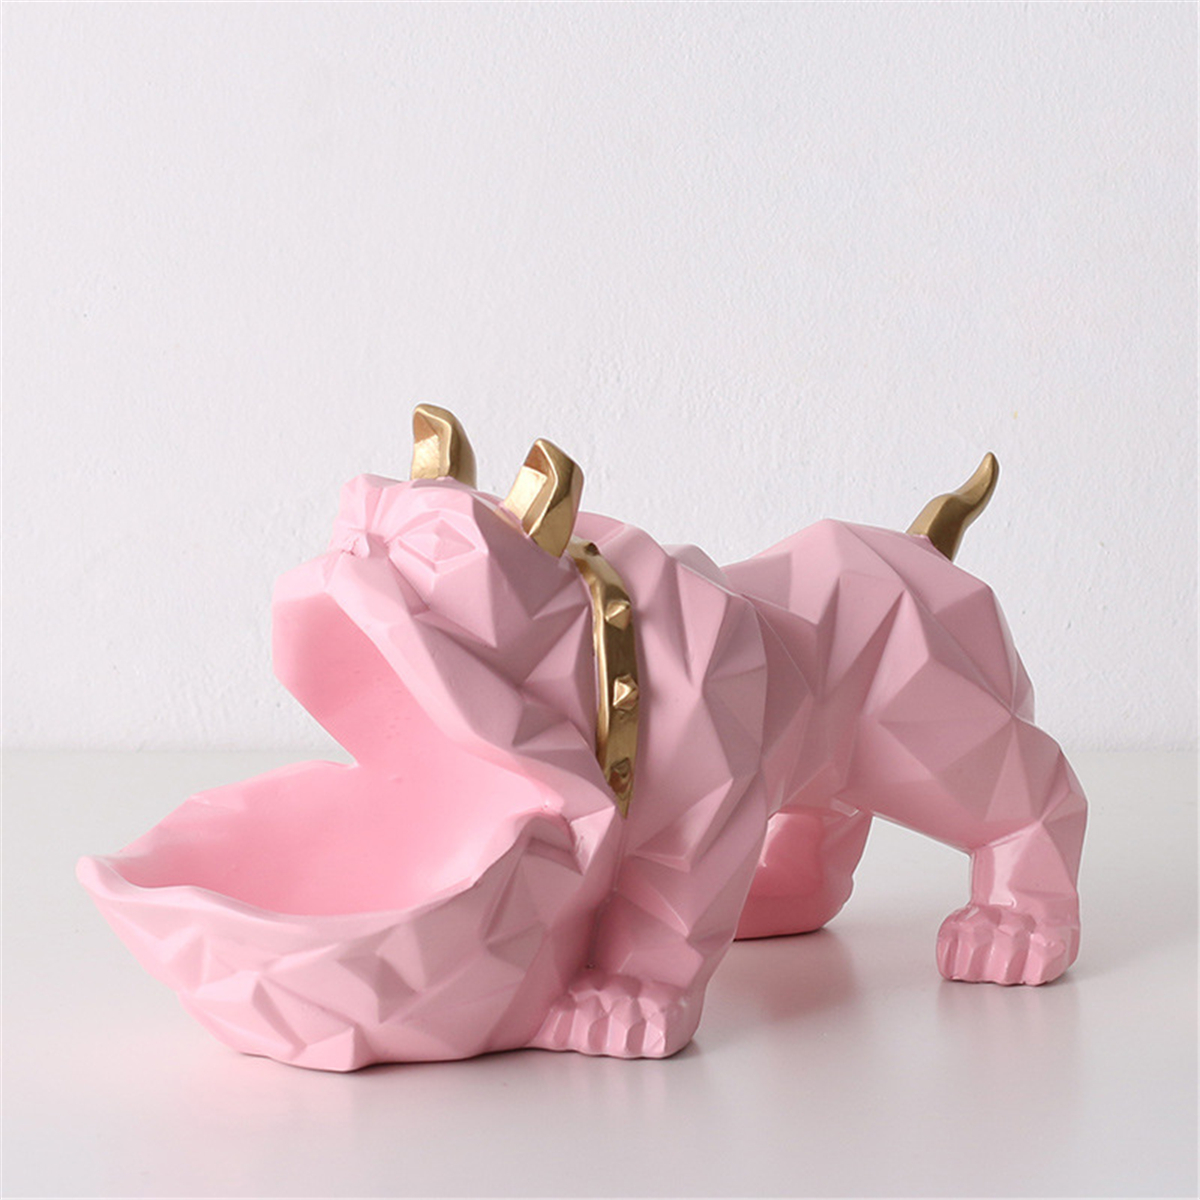 Bulldog-Animal-Sculpture-Puppy-Dog-Statue-Figure-Ornament-Gift-Decorations-1464229-3